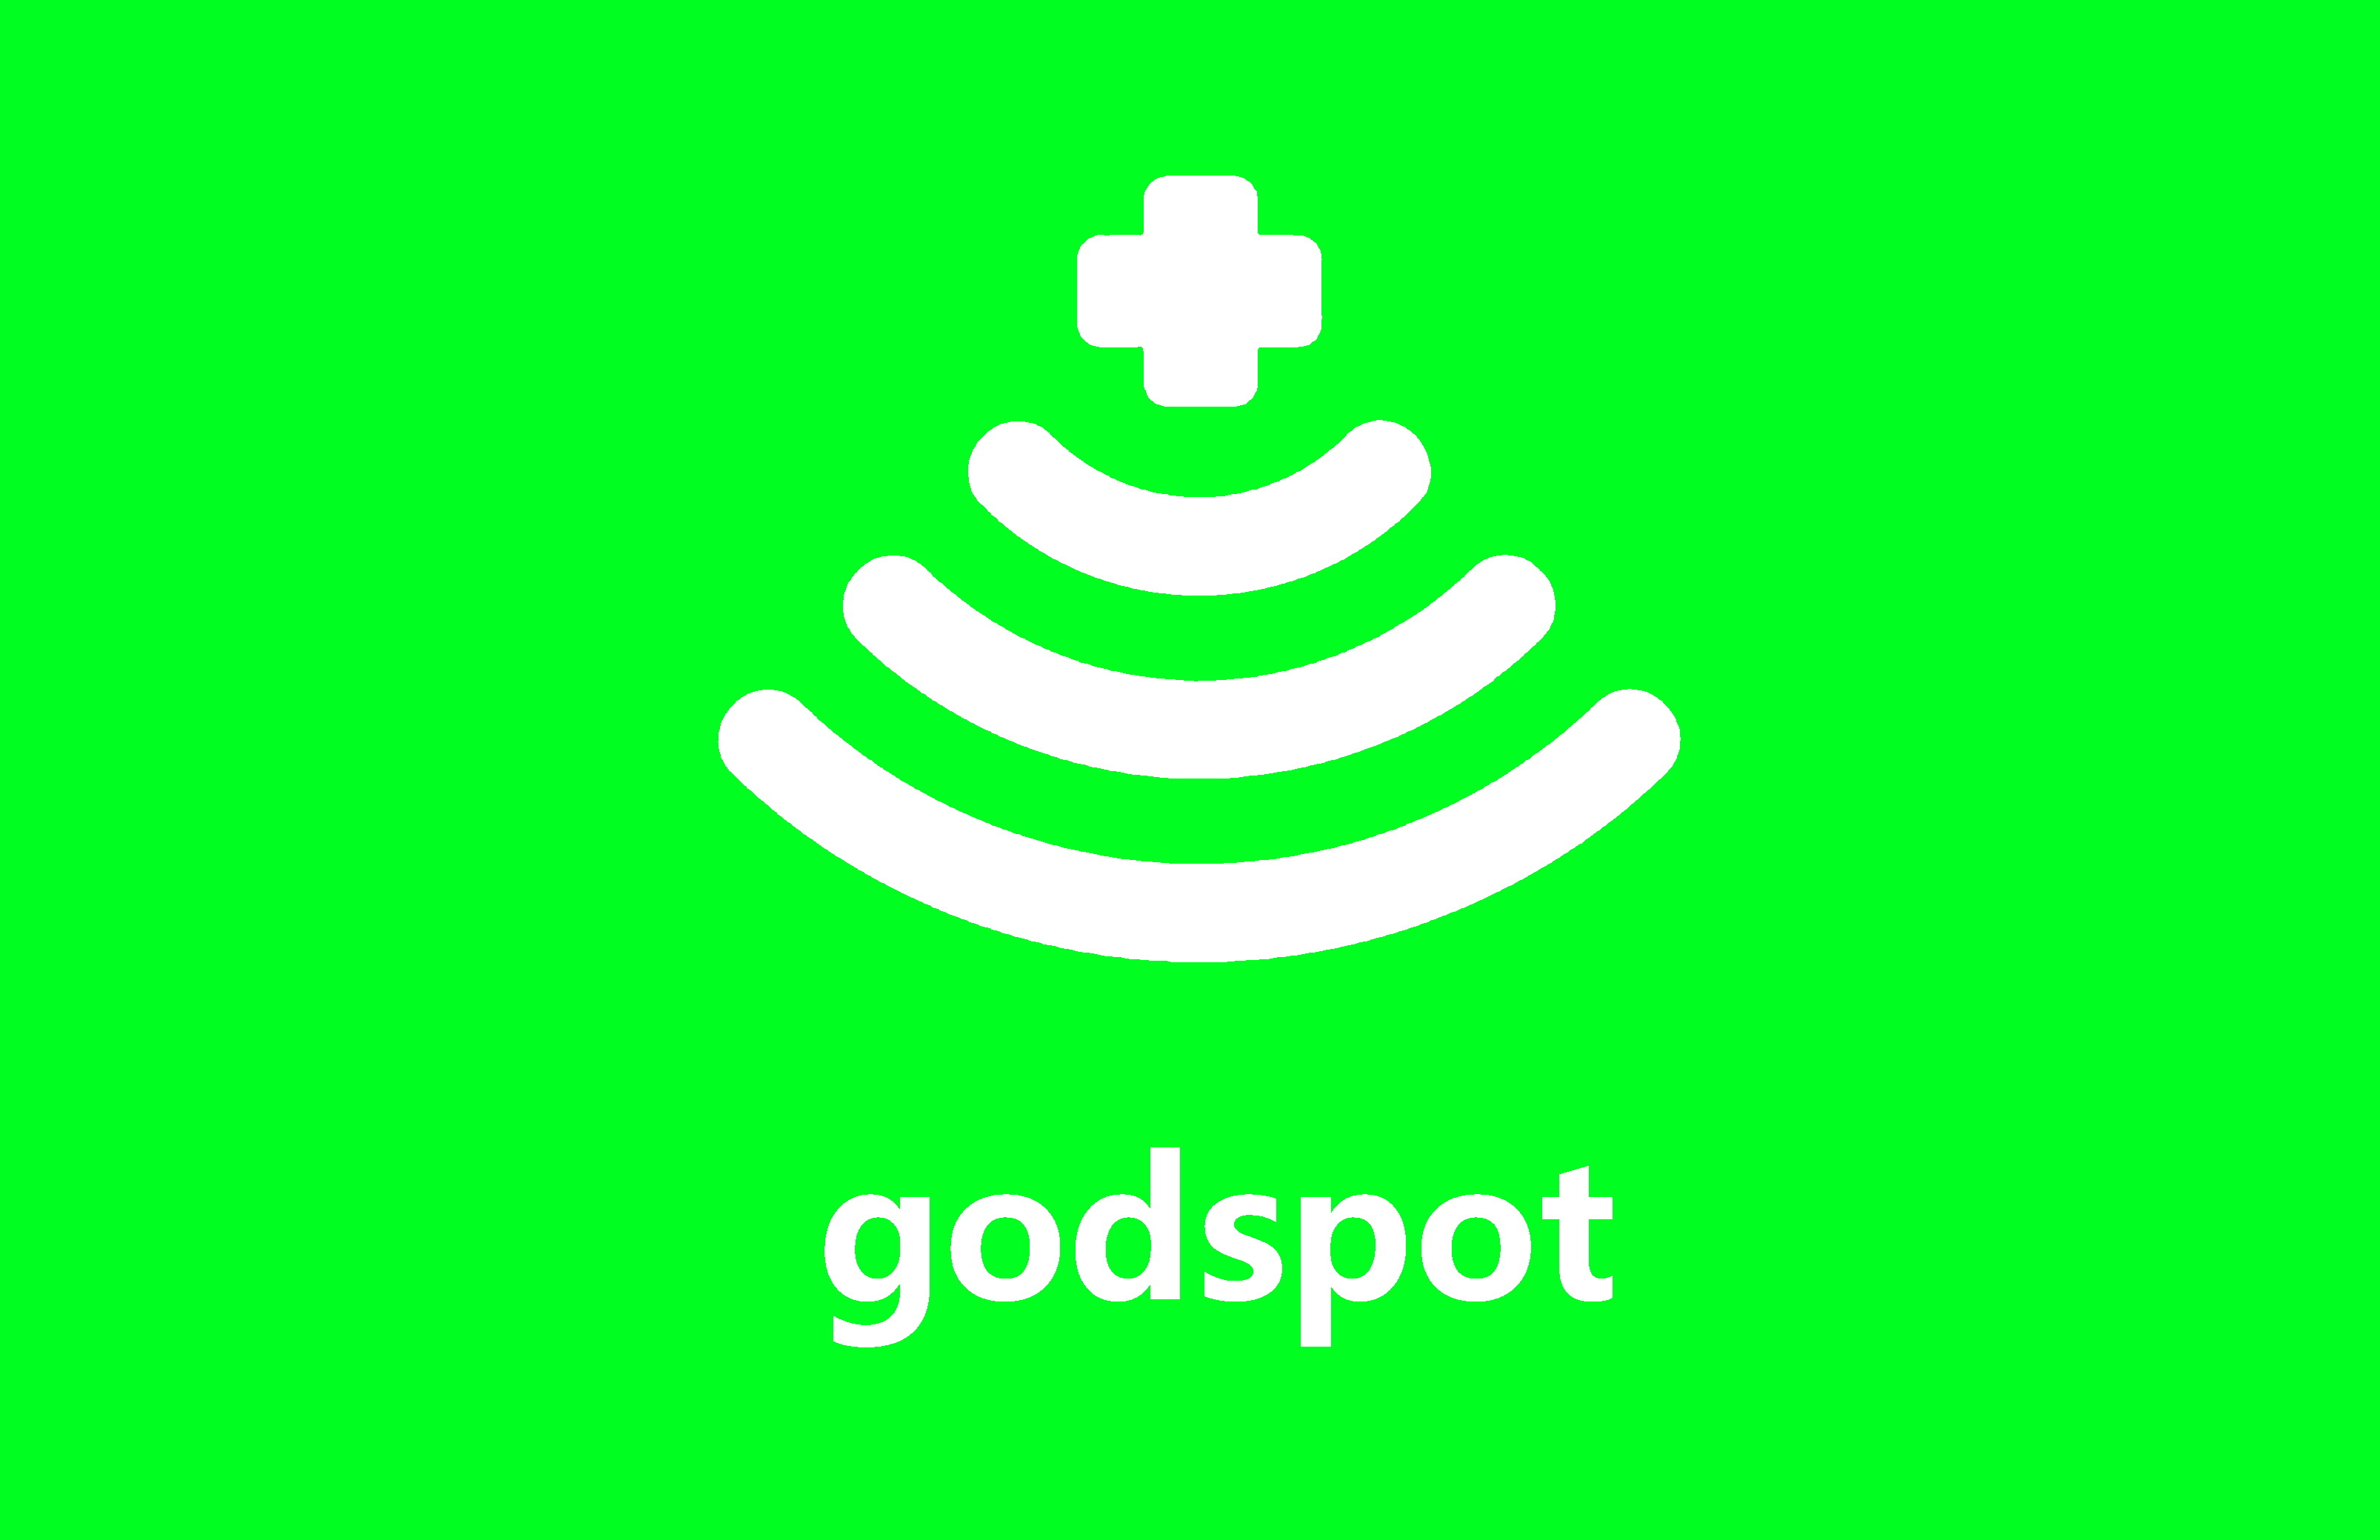 Godspot groen